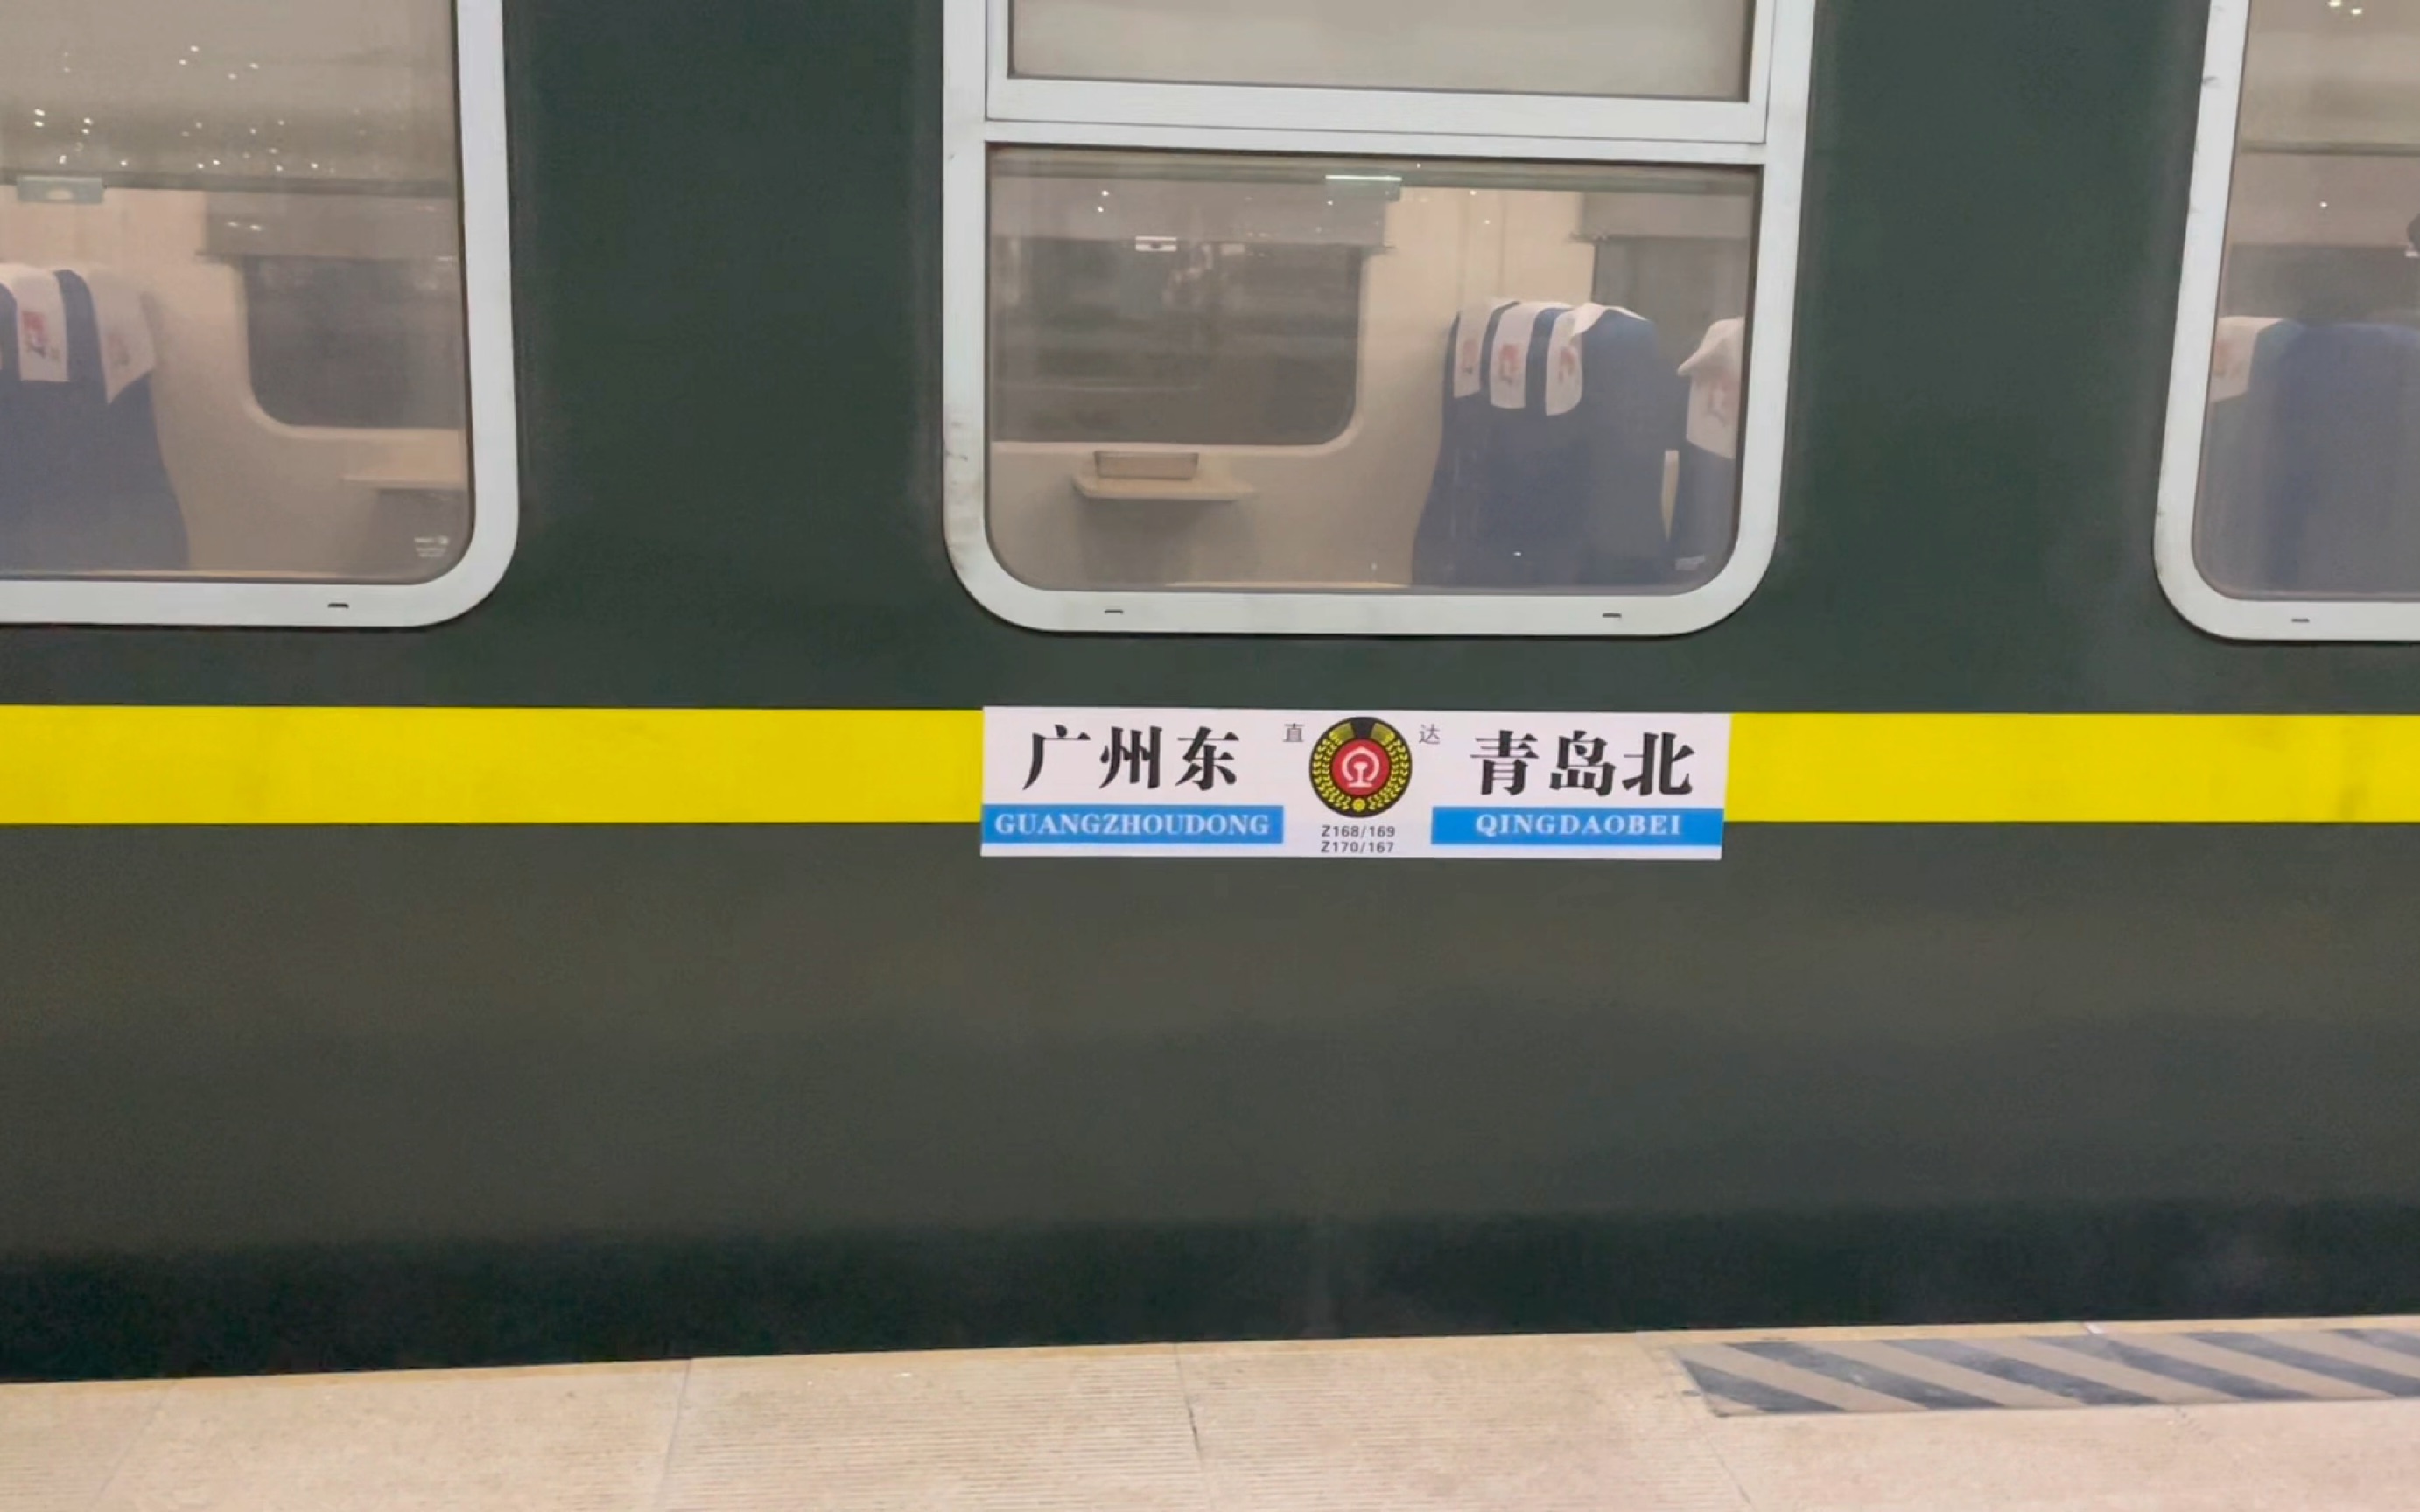 z166次列车座位分布图图片